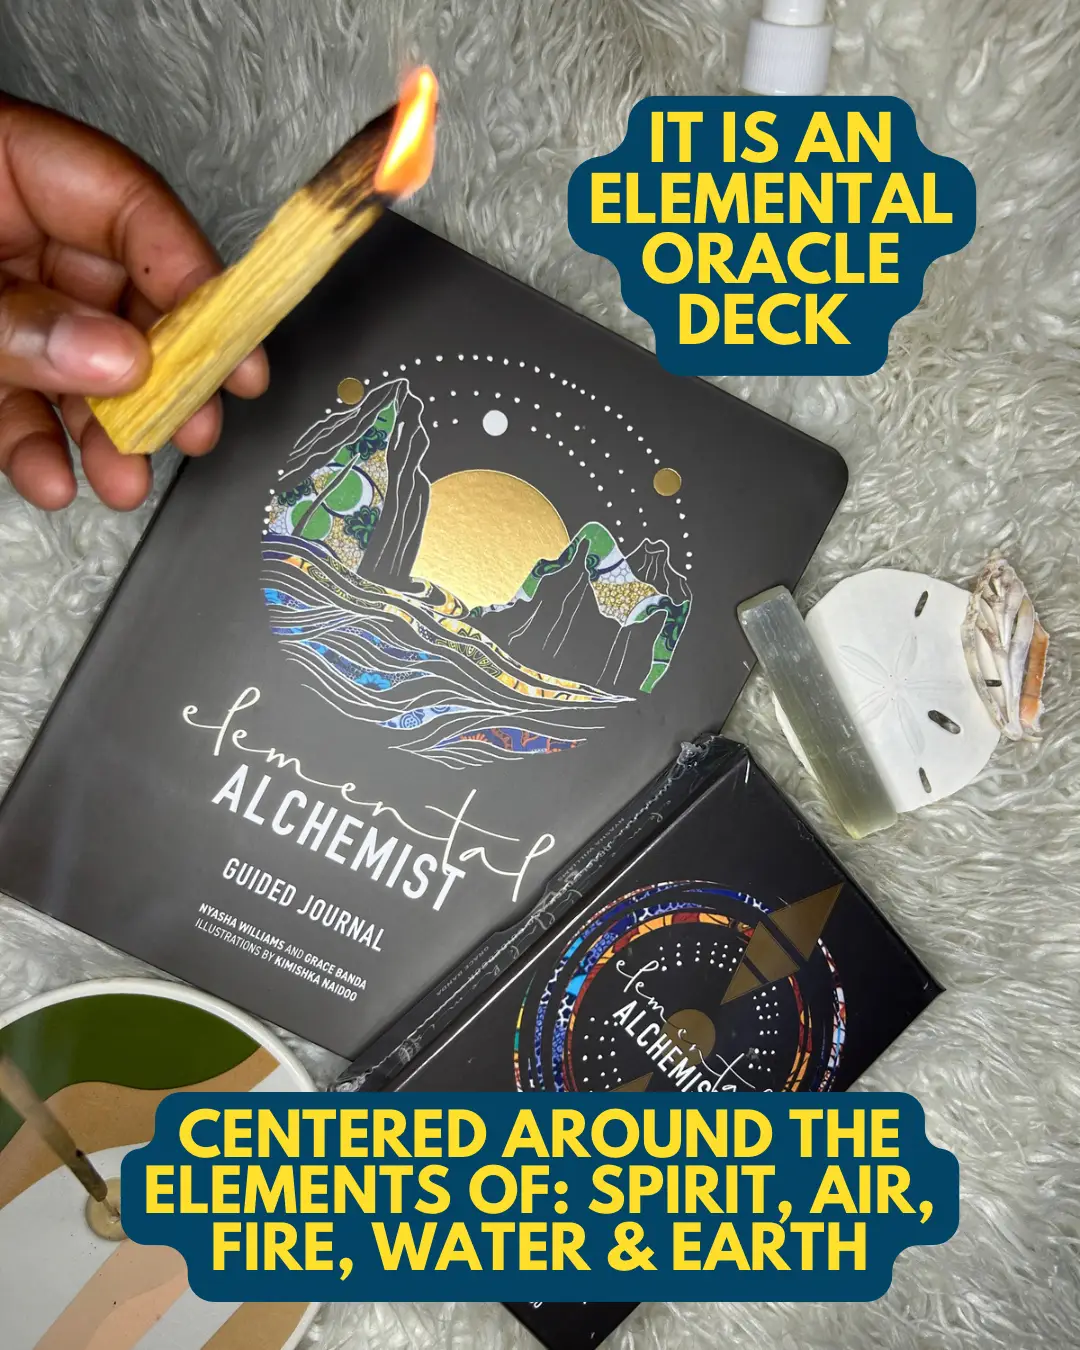 elemental alchemist oracle - Lemon8 Search